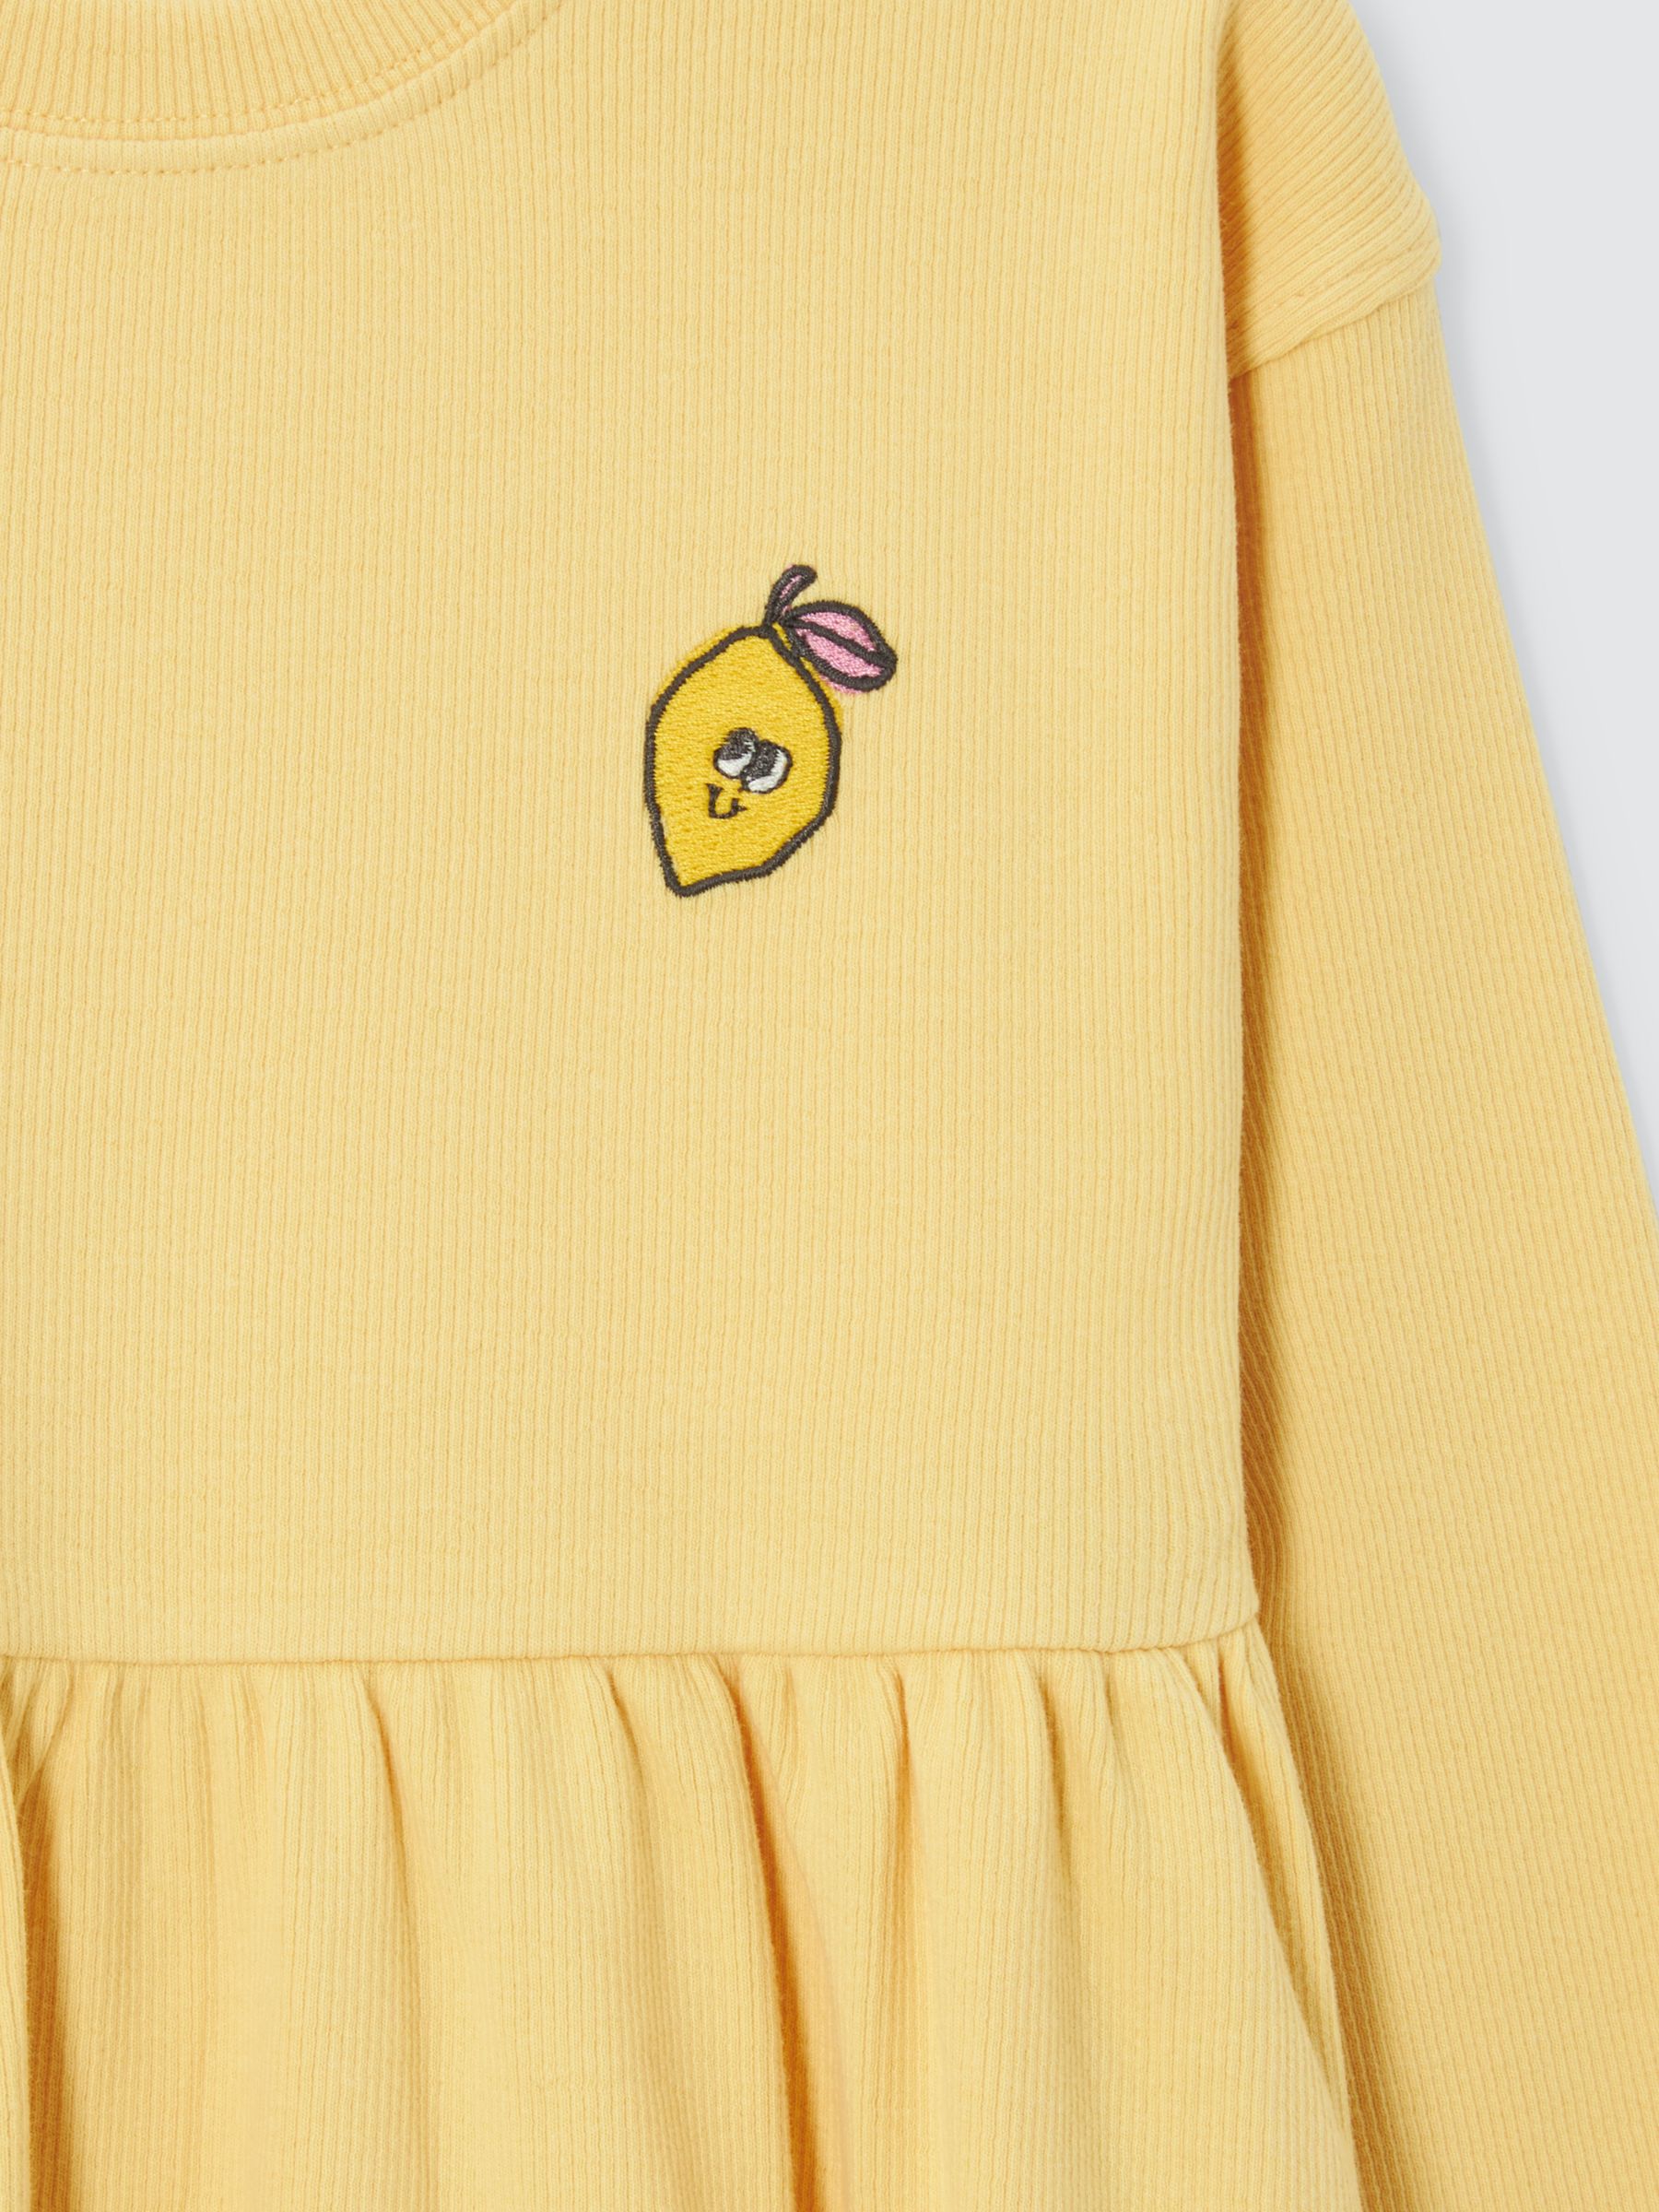 Buy John Lewis ANYDAY Kids' Lemon Smock Dress, Sundress Online at johnlewis.com